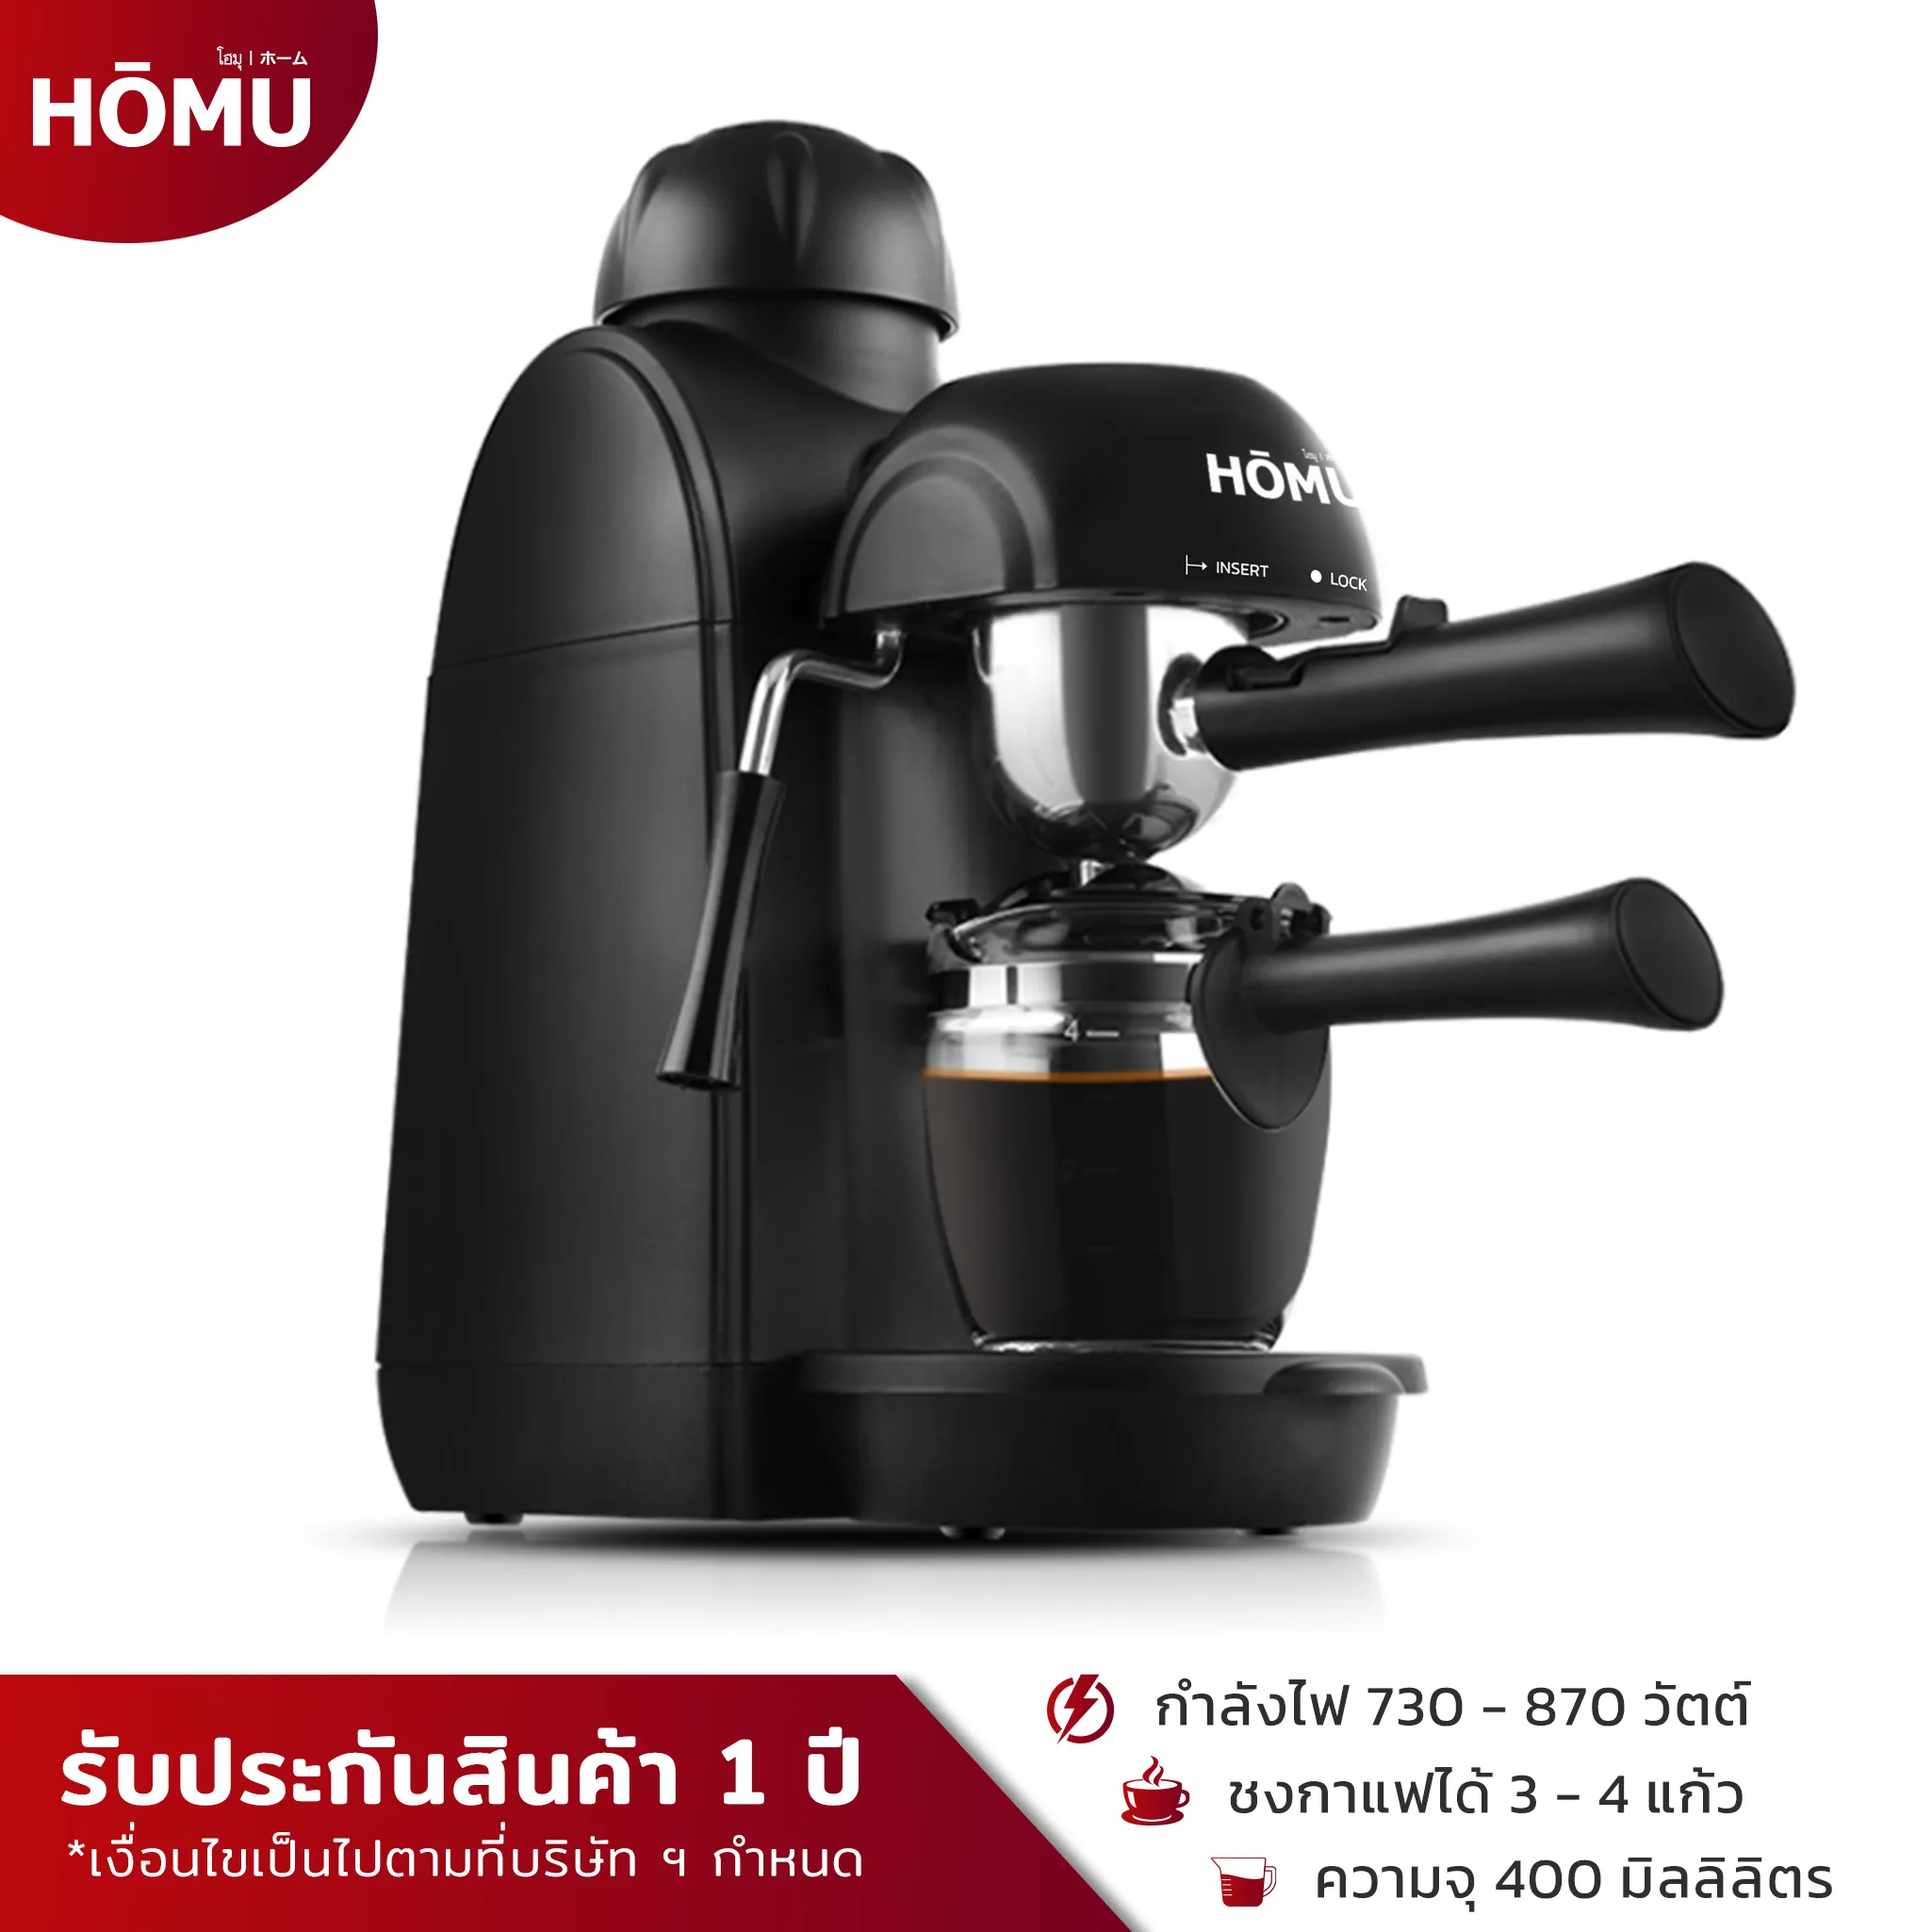 HOMU เครื่องชงกาแฟสดพร้อมทำฟองนมในเครื่องเดียวThe Coffee Maker-สีดำ